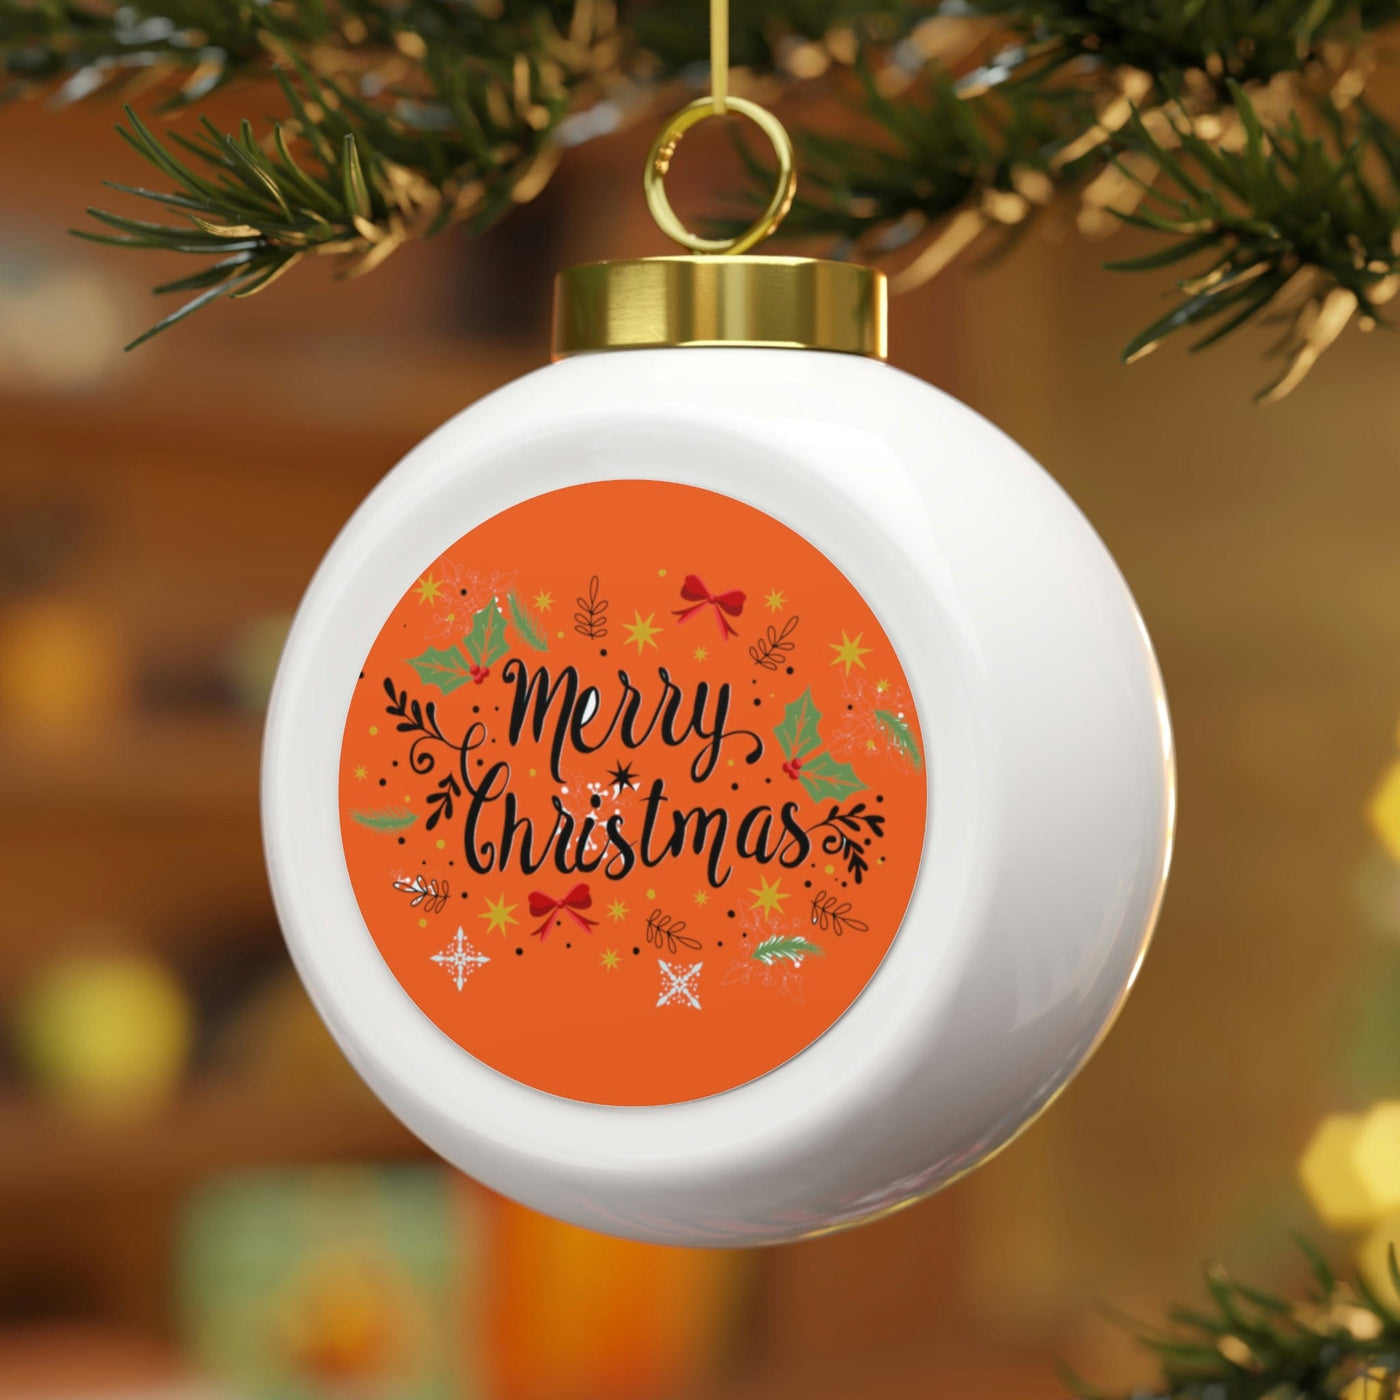 We Love Christmas Ball Ornament - Orange Crush